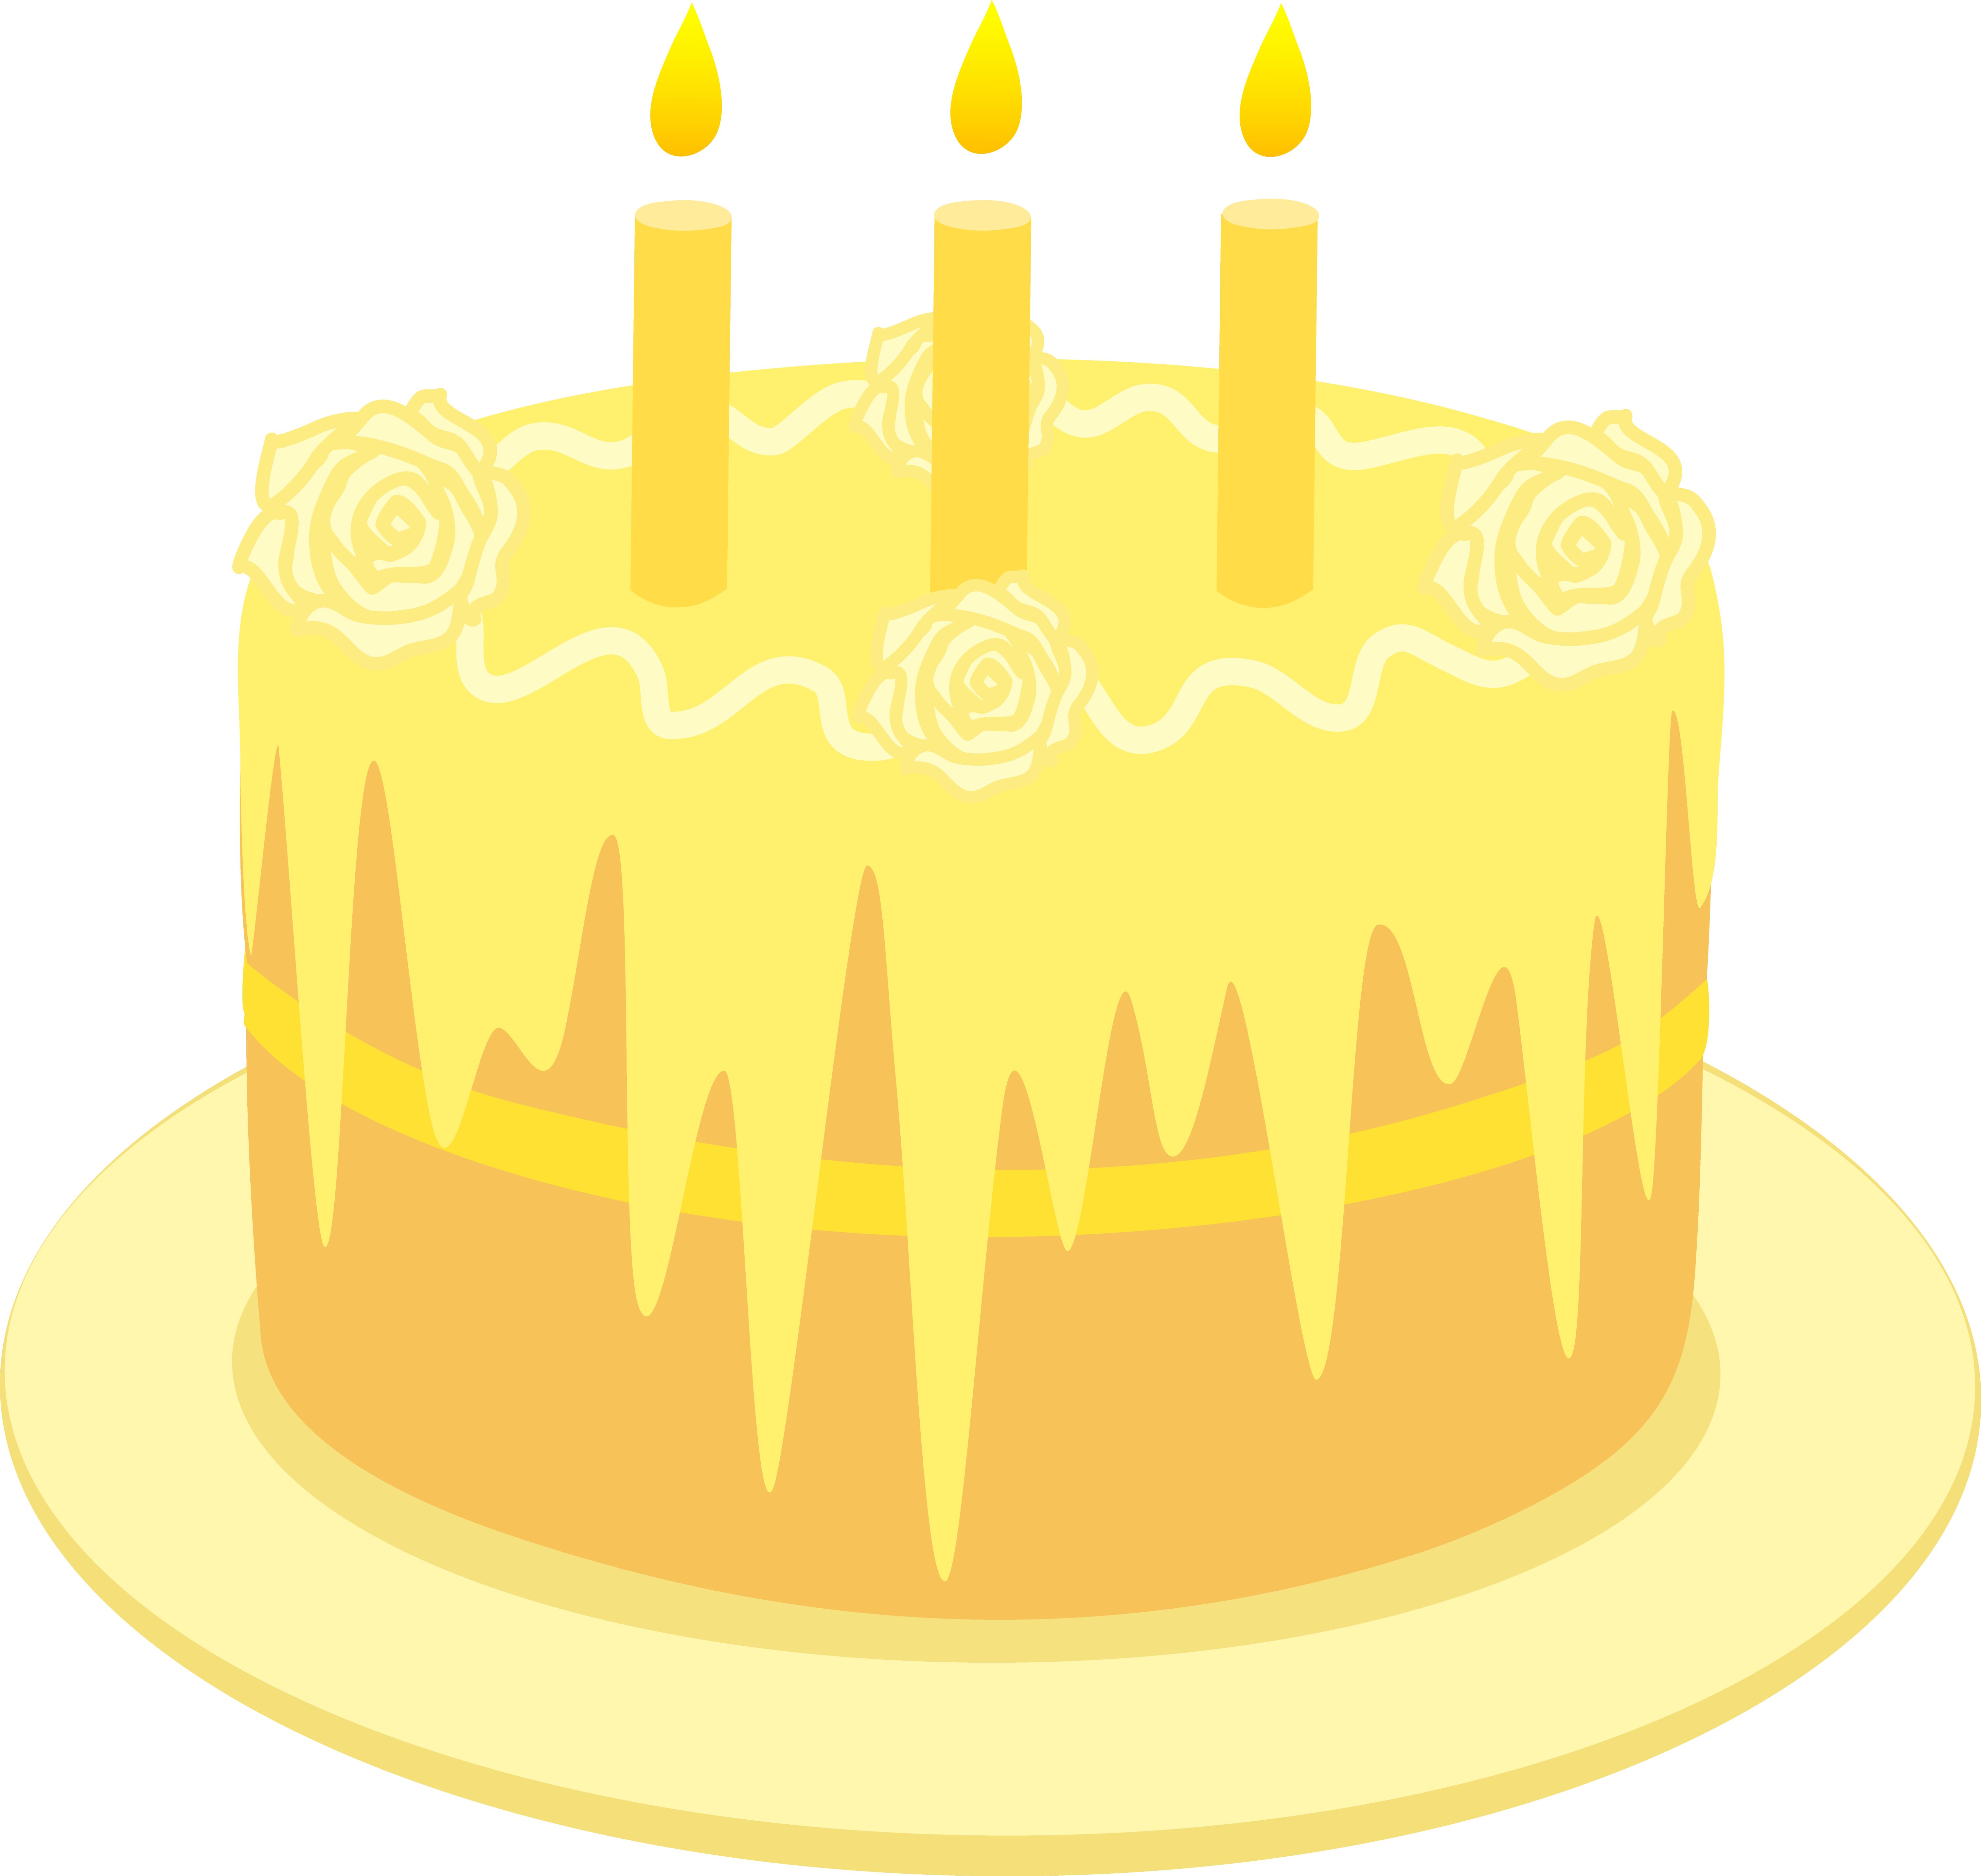 Lemon Birthday Cake With Candles.